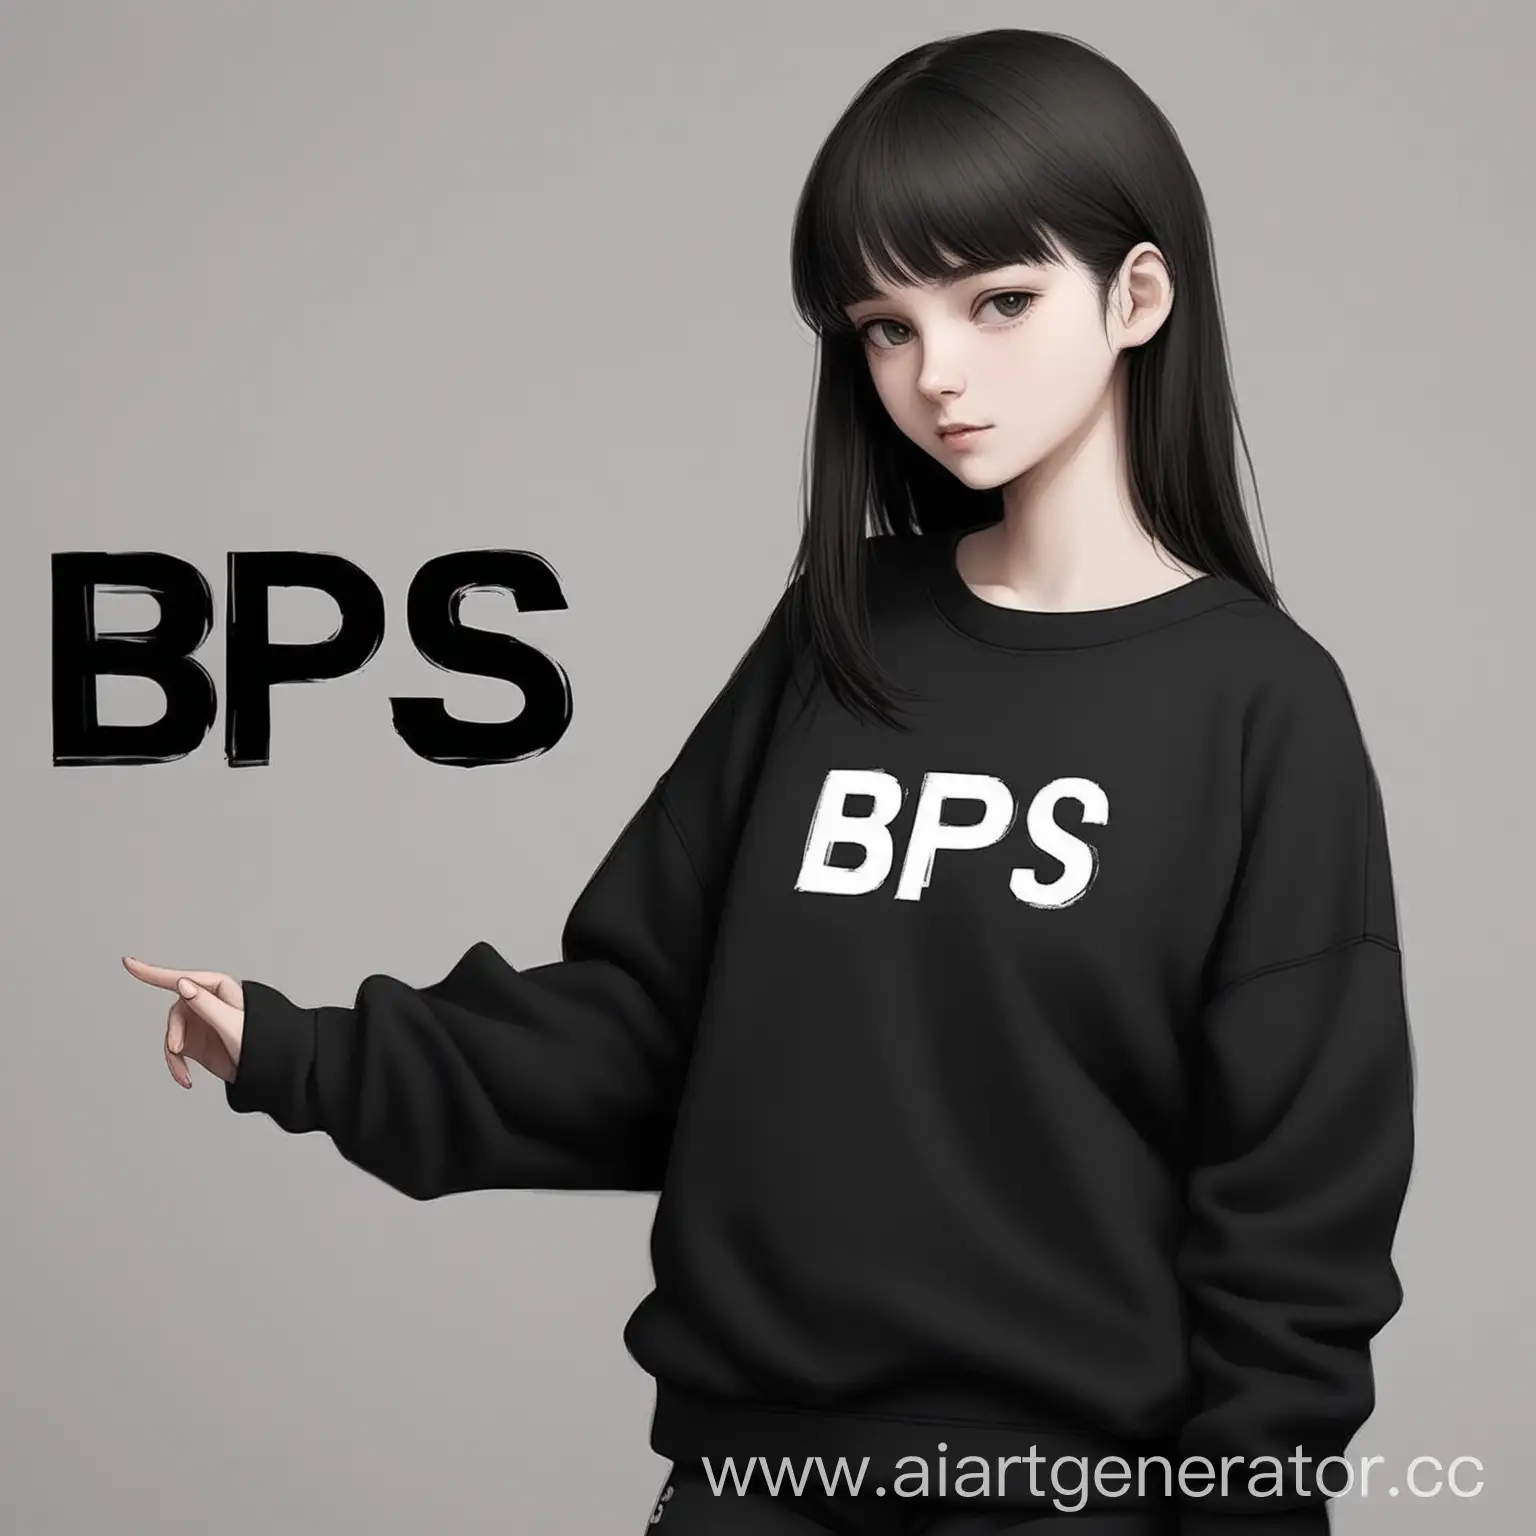 Girl-in-Black-Sweatshirt-with-BPS-Inscription